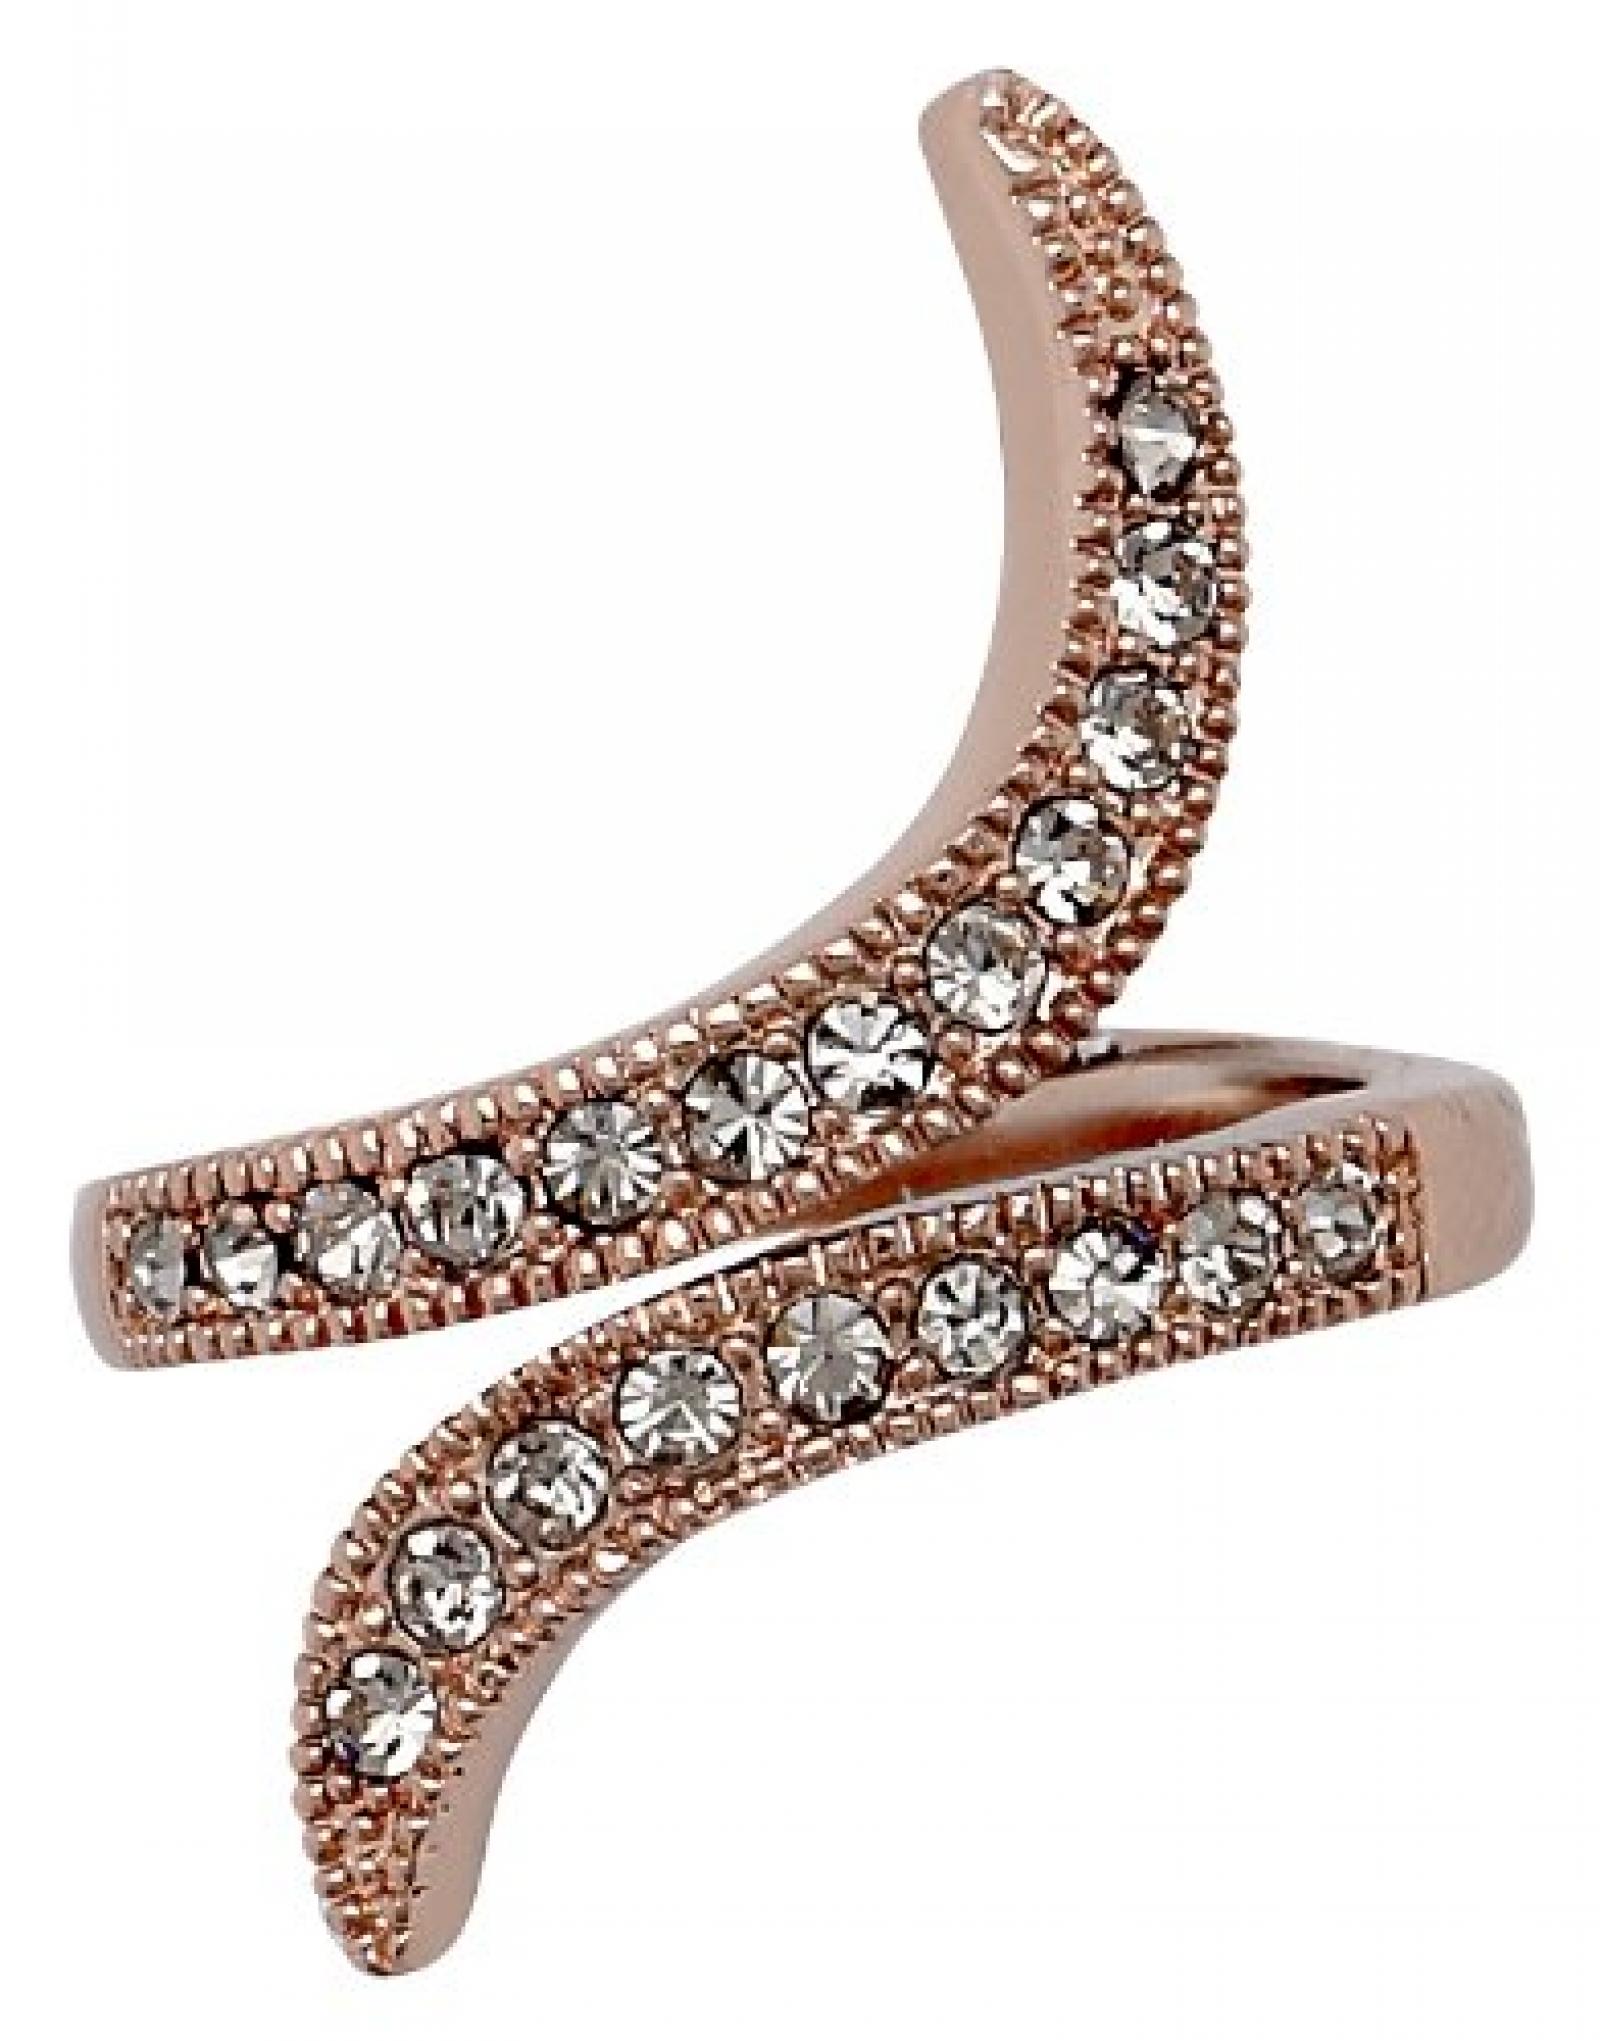 Pilgrim Jewelry Damen-Ring aus der Serie Classic roségold beschichtet grau 3 cm verstellbar Gr. 51-59 601314014 